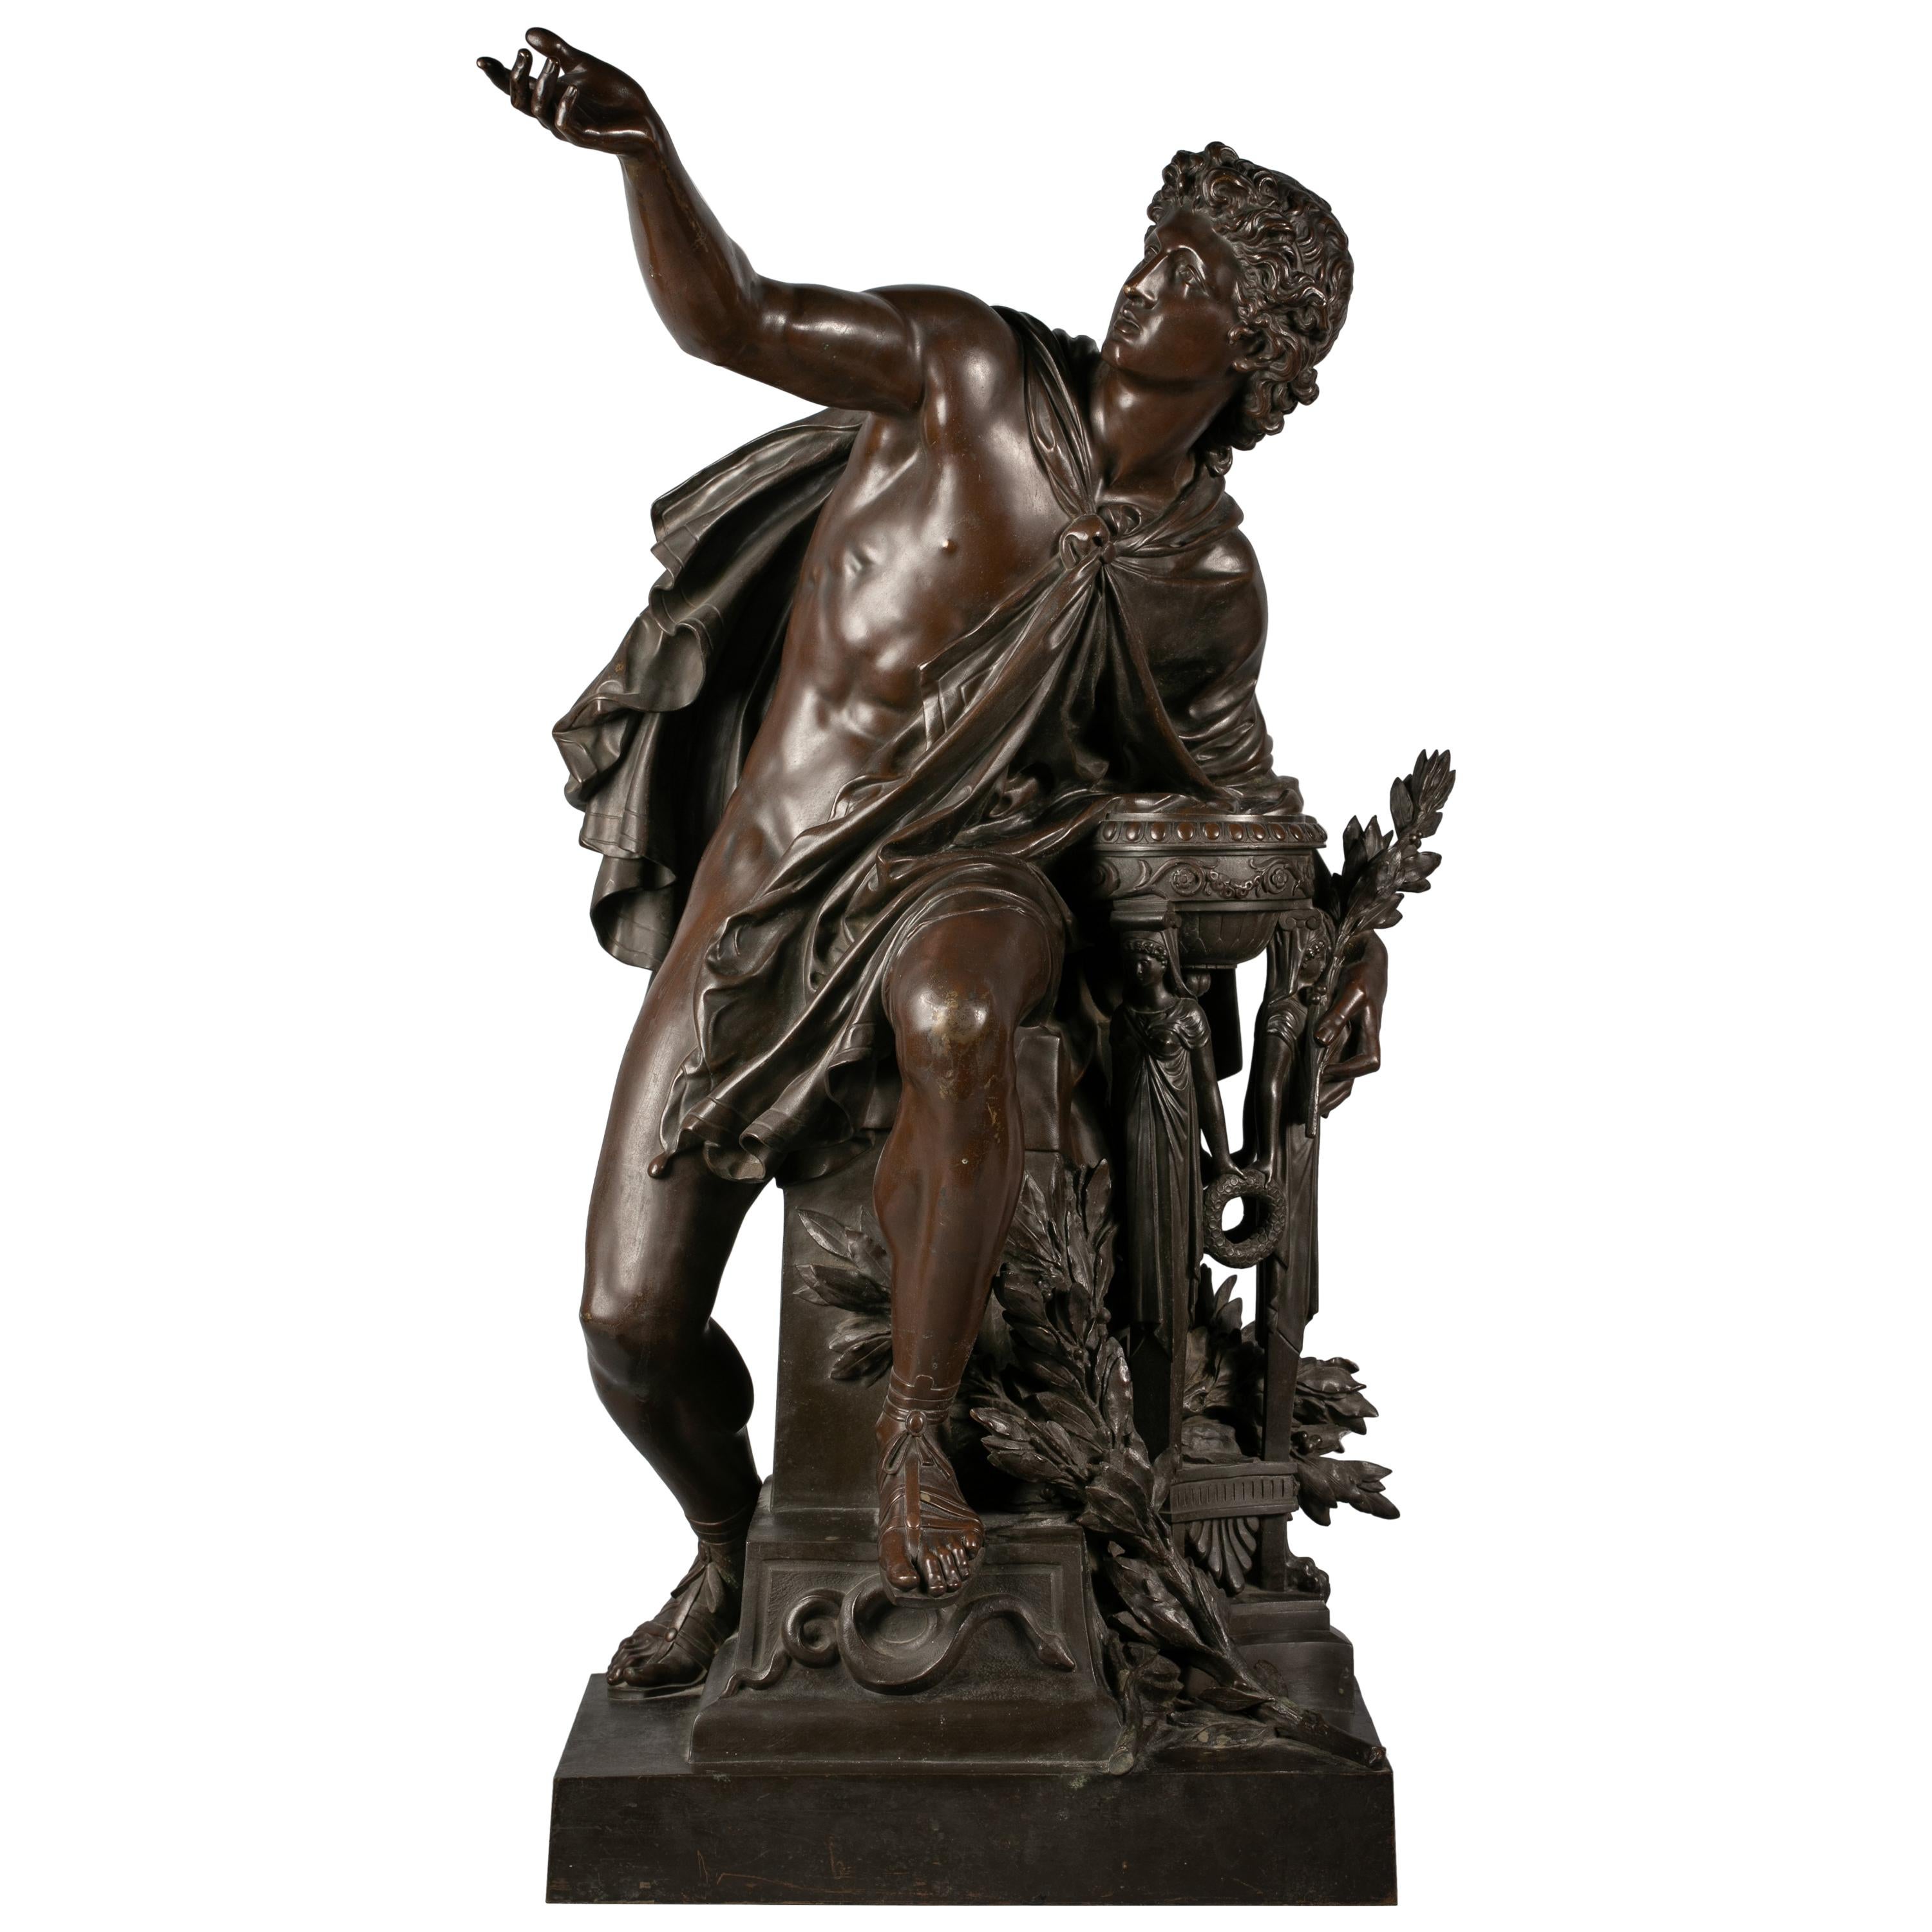 French Bronze of Apollo, by Mathurin Moreau